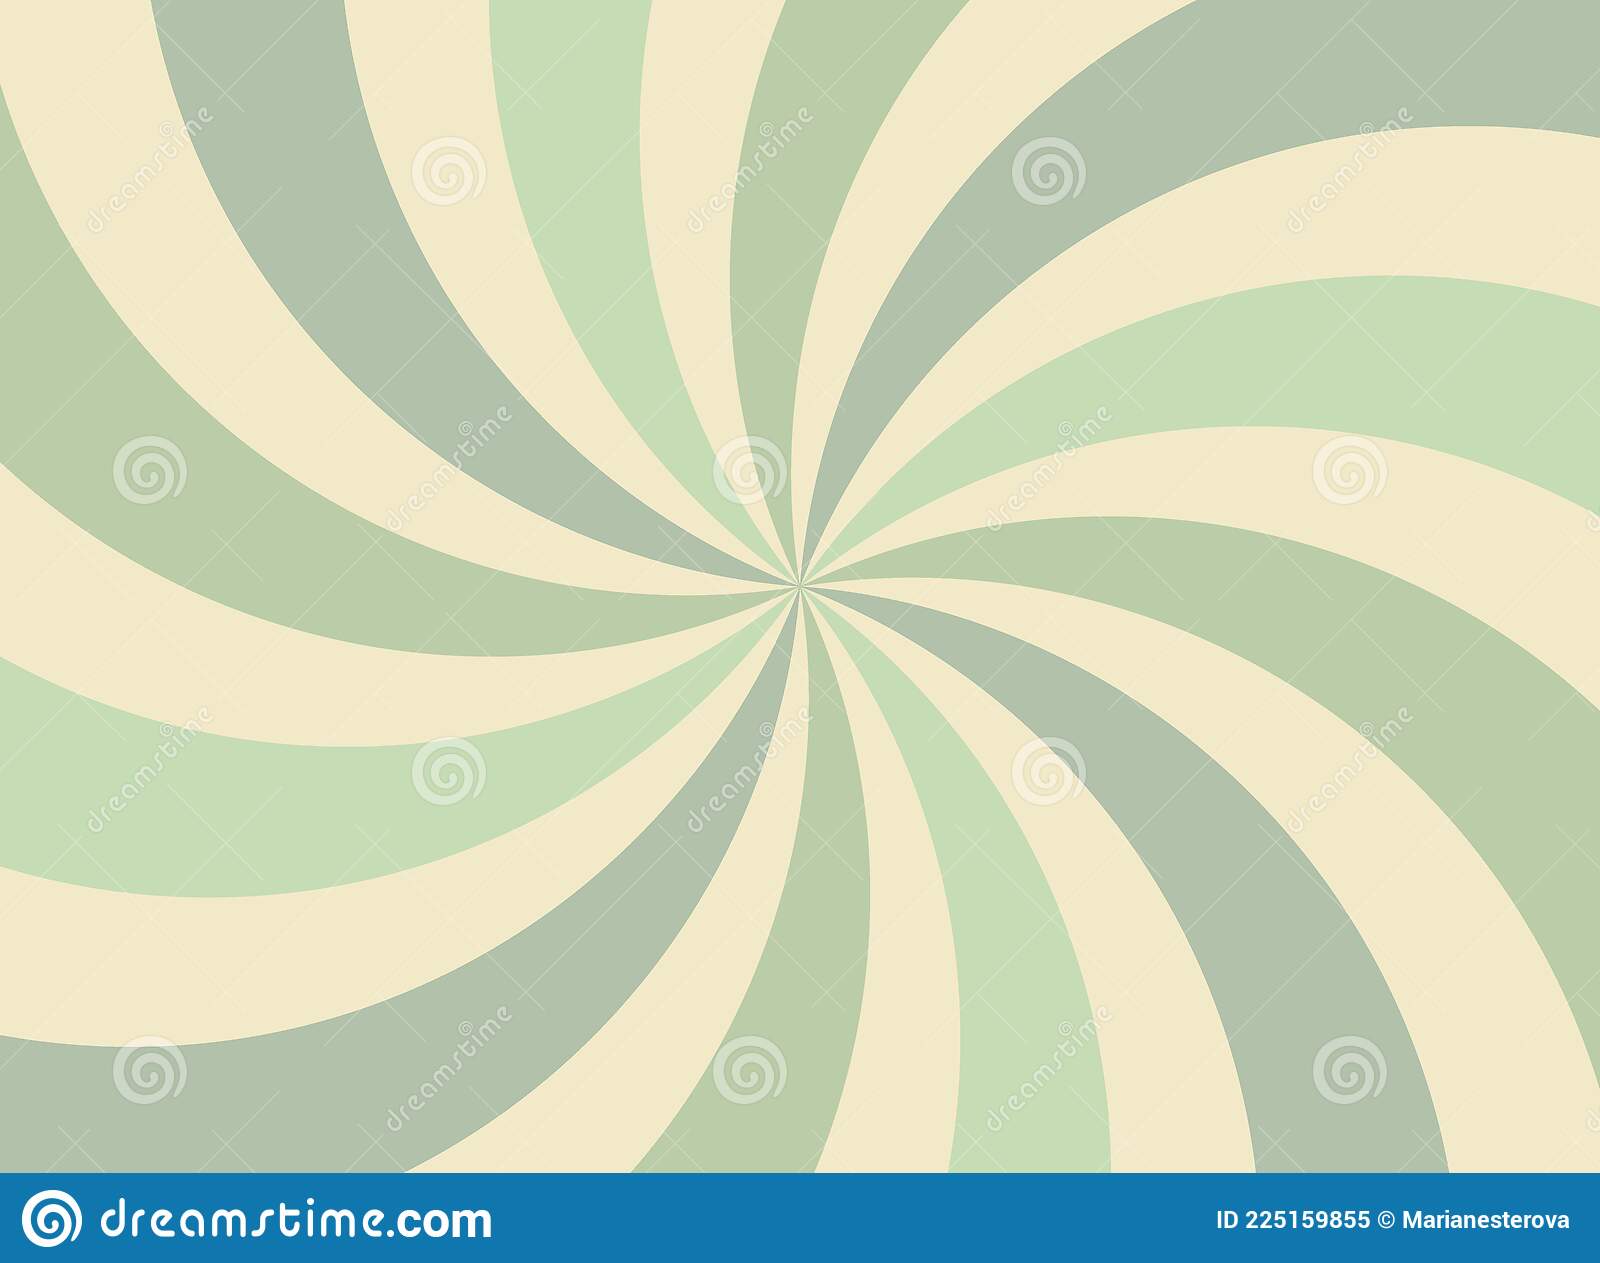 Sunlight horizontal spiral background sage green color burst wallpaper stock vector